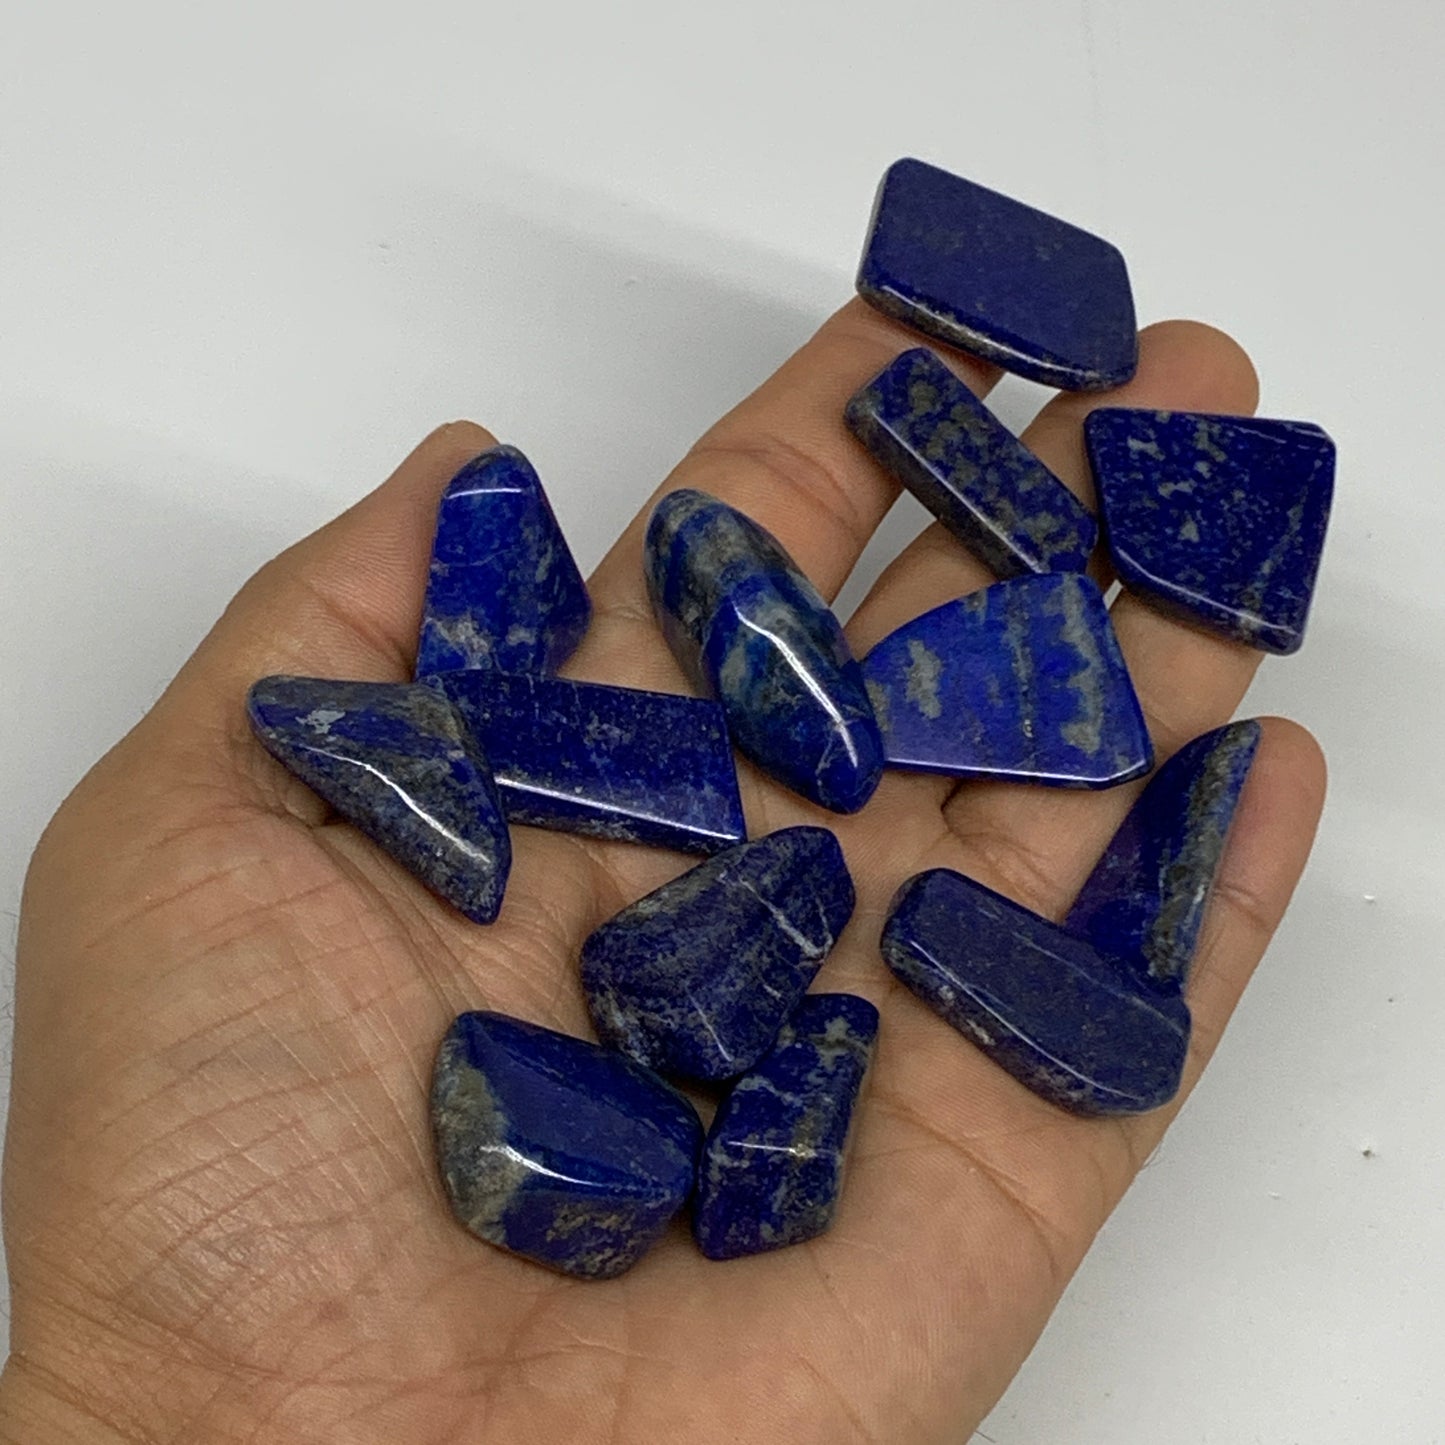 112.6g,0.8"-1.4", 13pcs, Natural Lapis Lazuli Tumbled Stone @Afghanistan, B30290